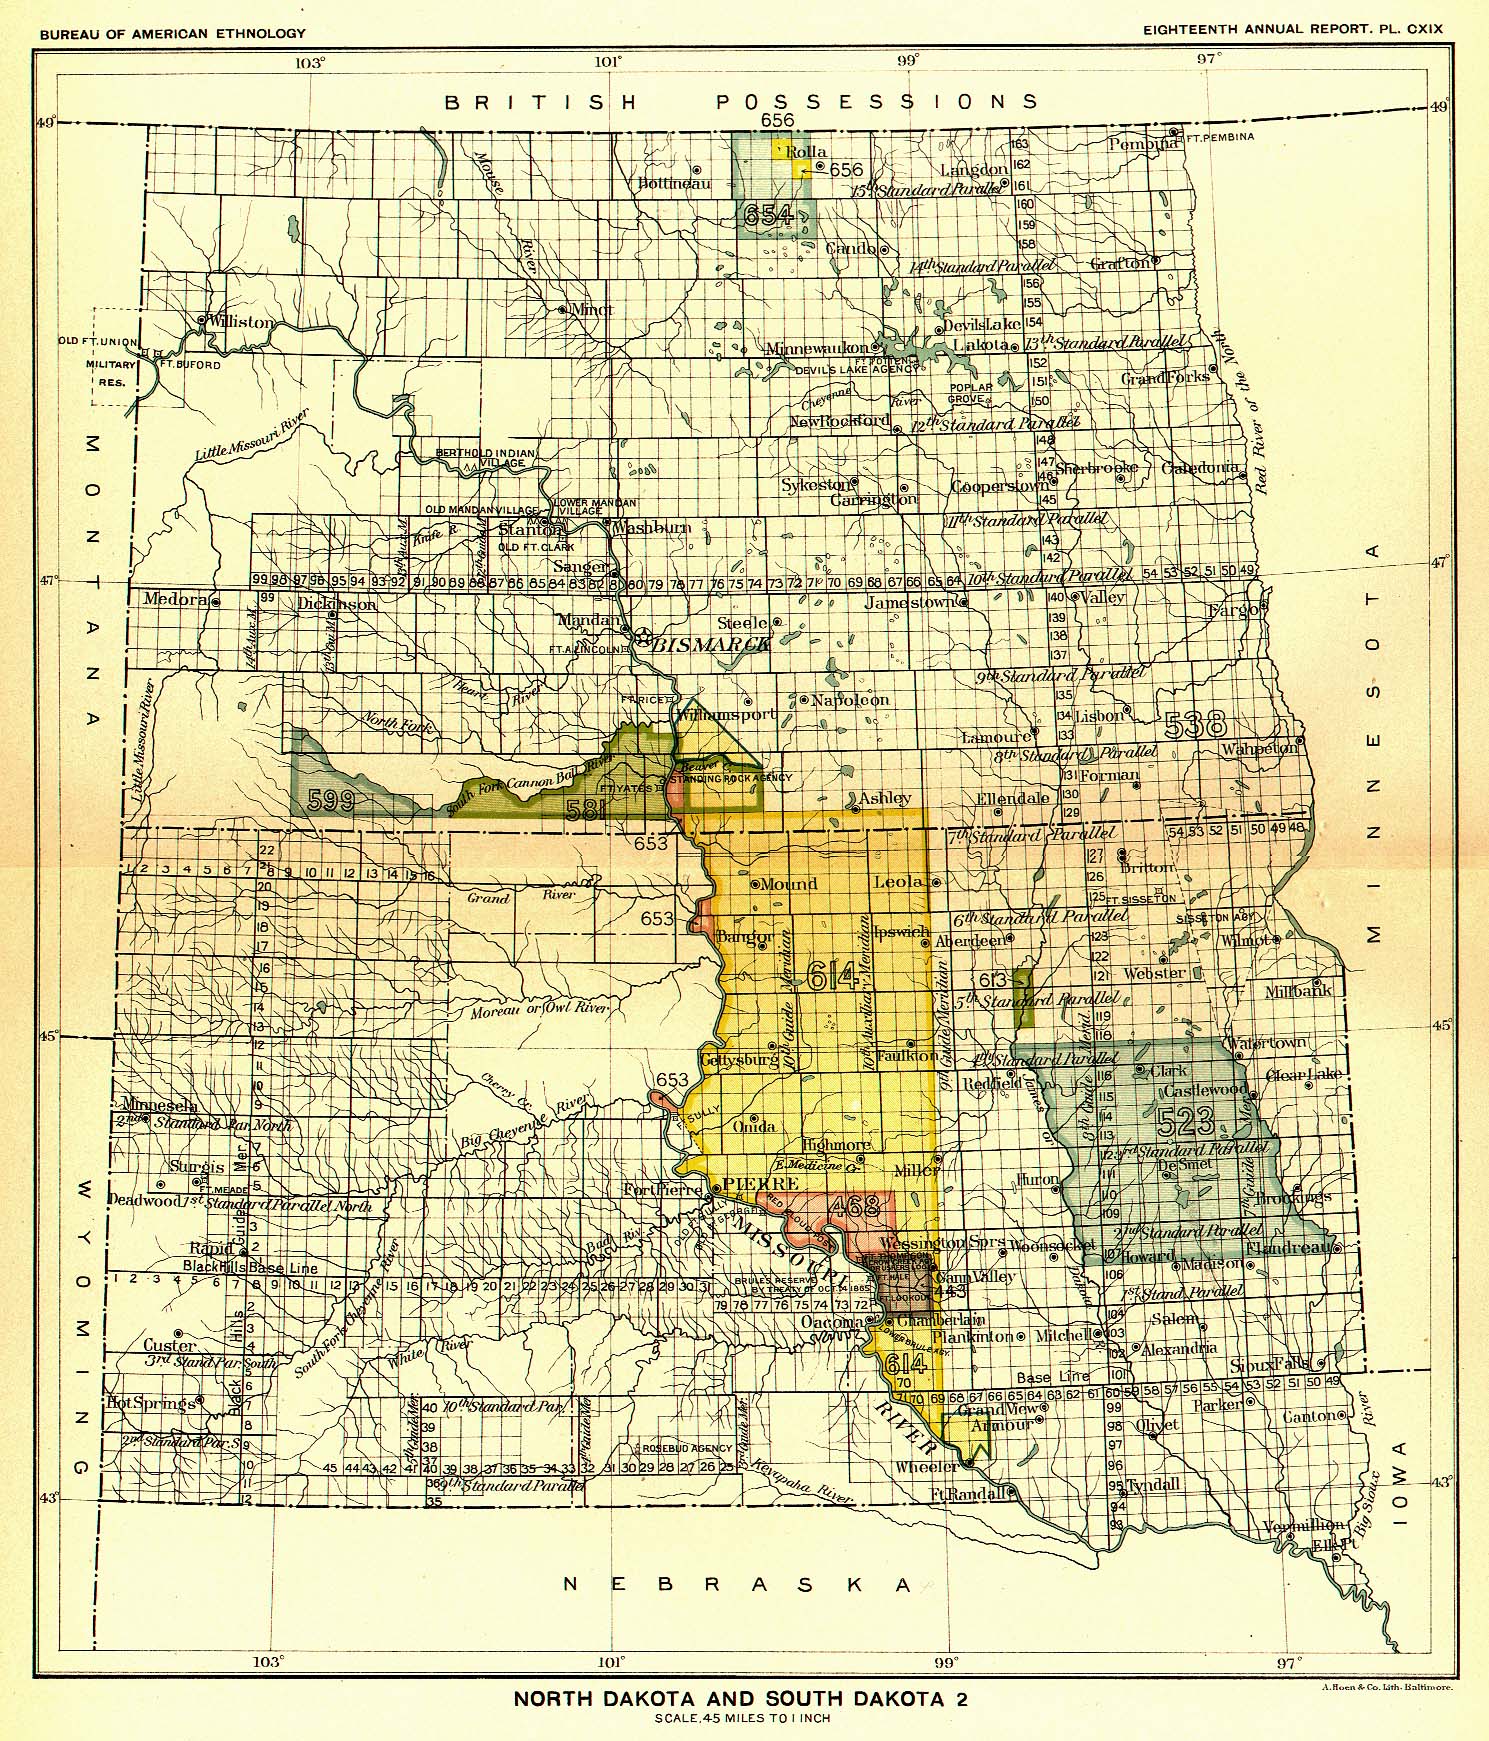 North Dakota and South Dakota 2, 
Map 12